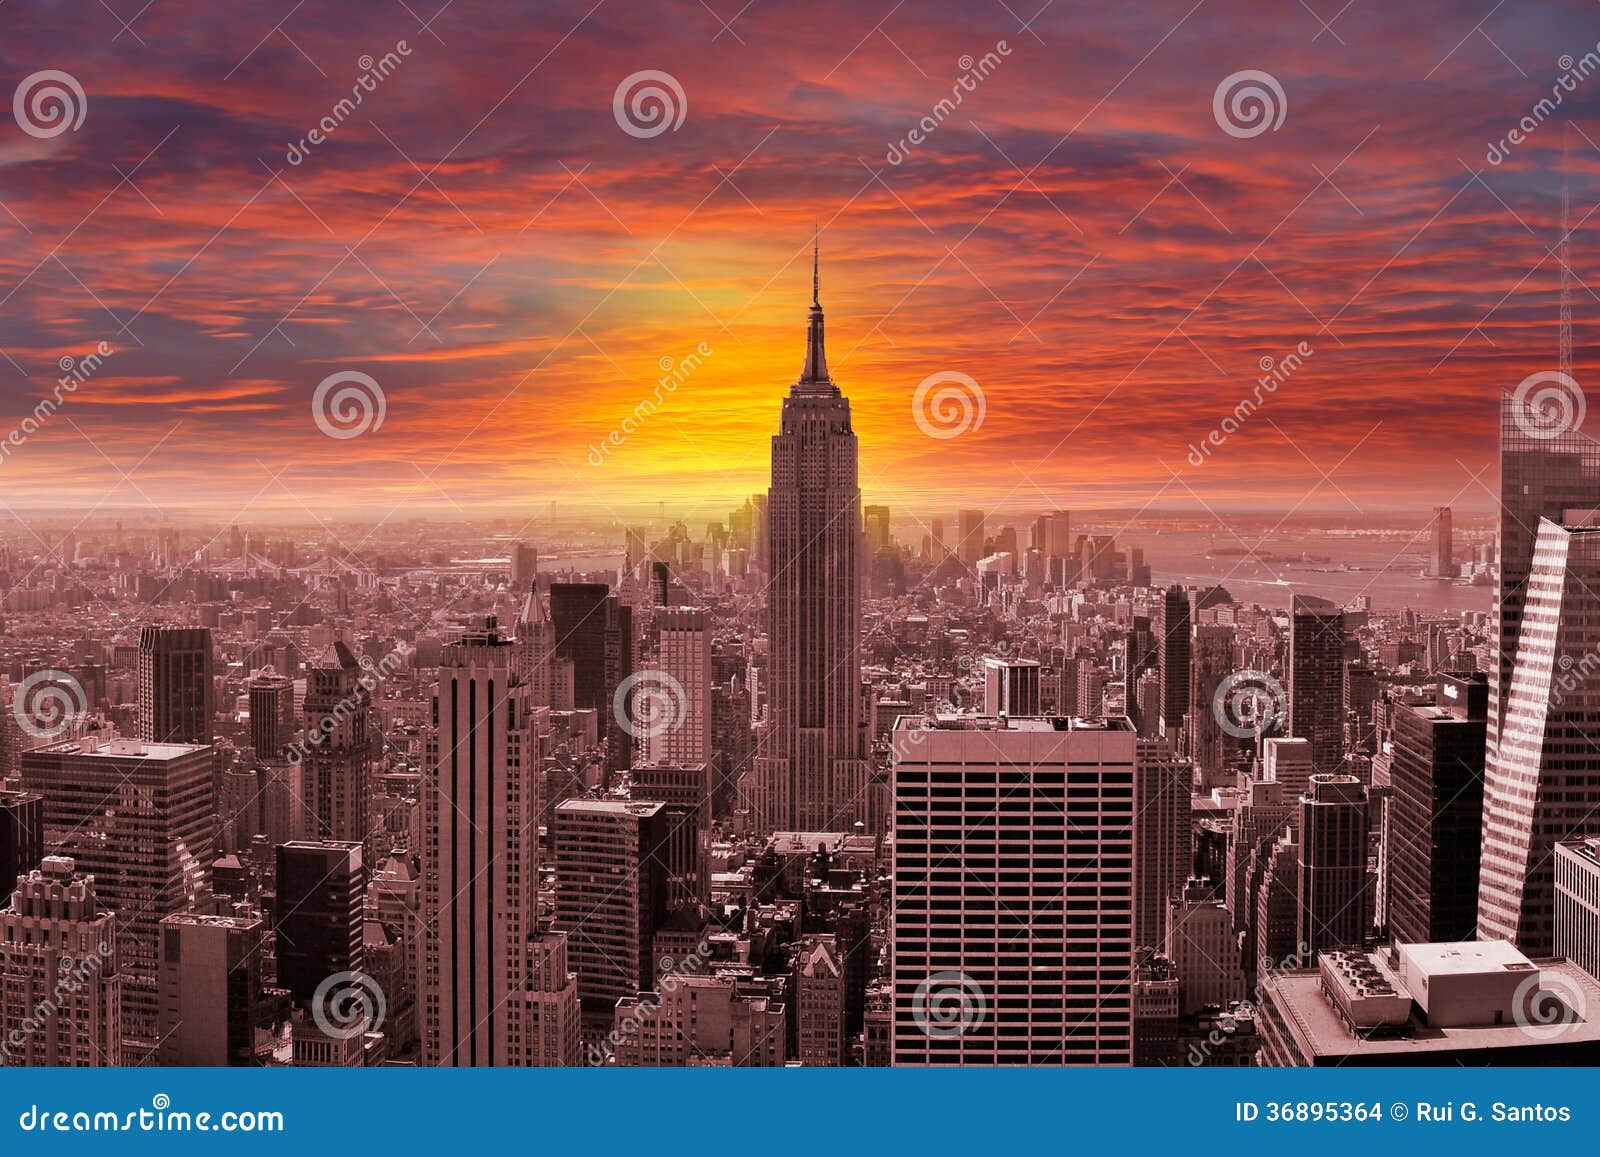 new york city skyline with a sunset